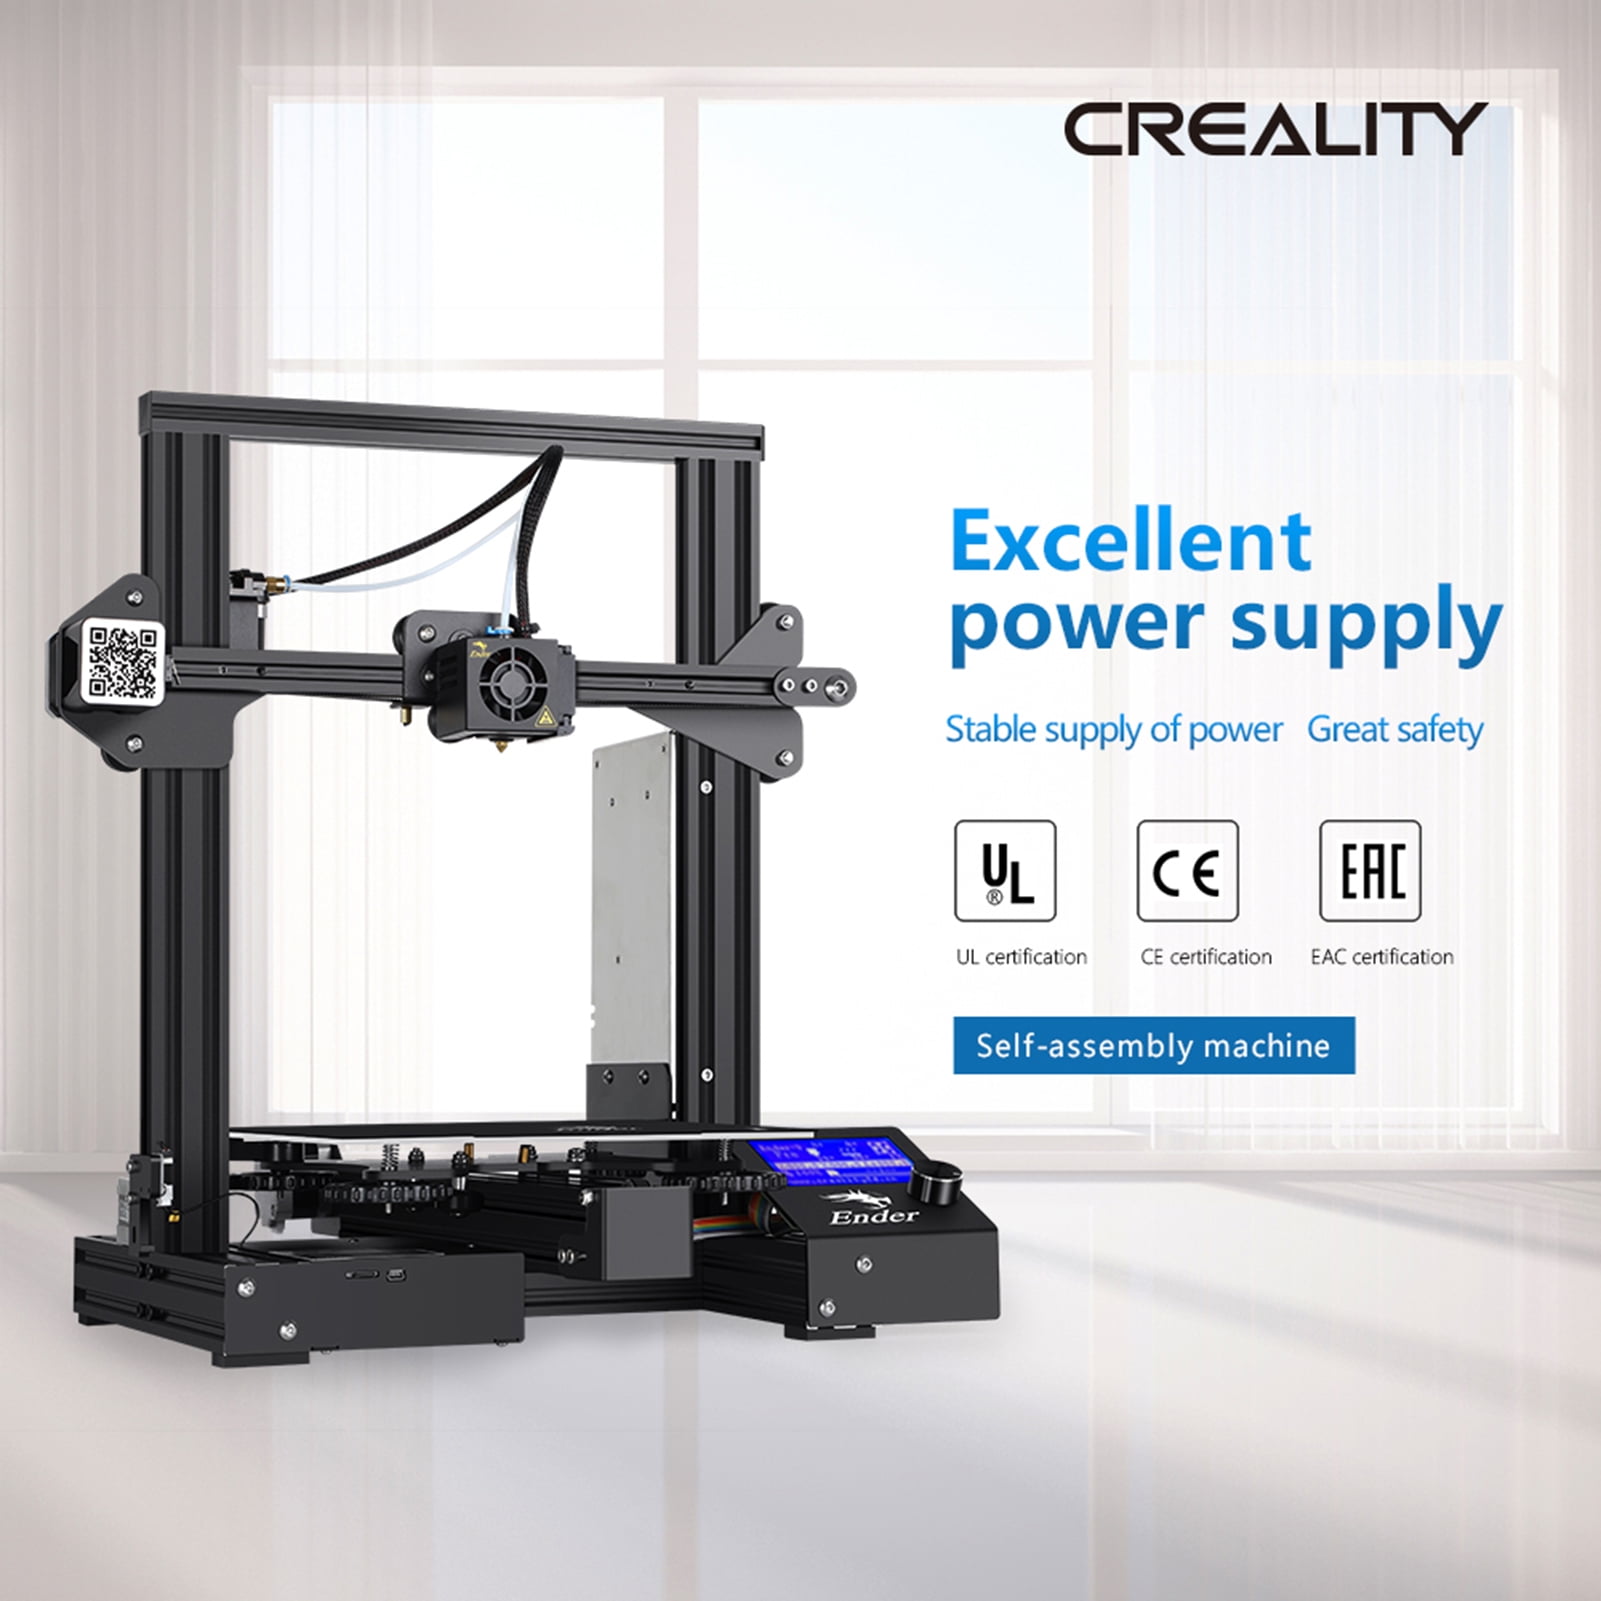 Creality 3D Creality 3D Ender-3 V-slot Prusa I3 DIY 3D Printer Kit 220x220x250mm 